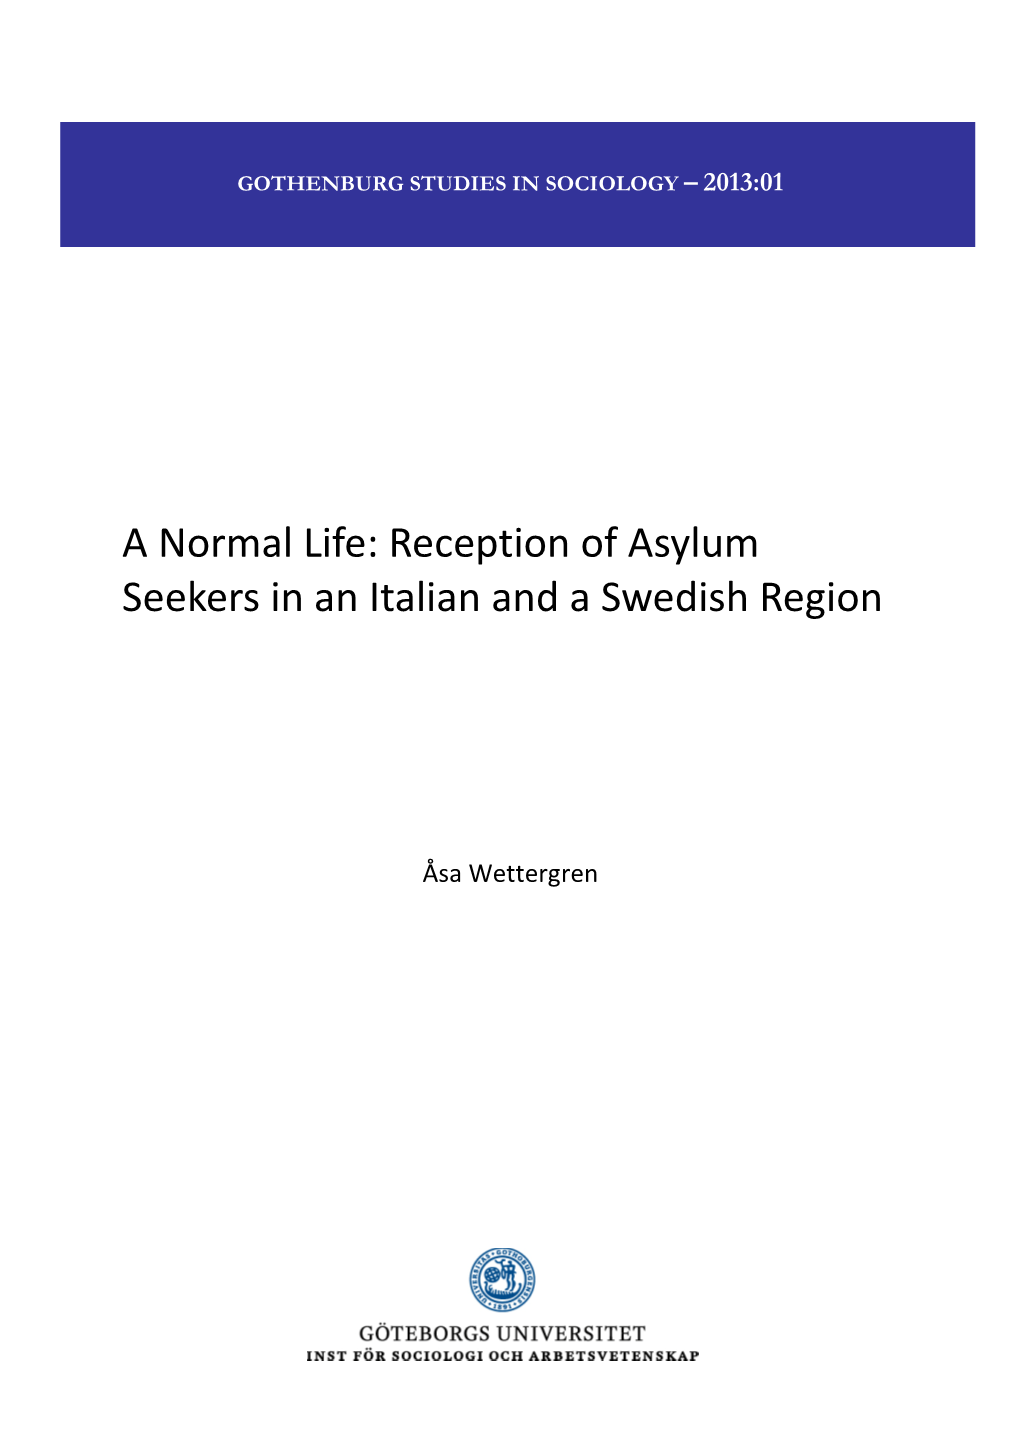 Reception of Asylum Seekers in an Italian and a Swedish Region